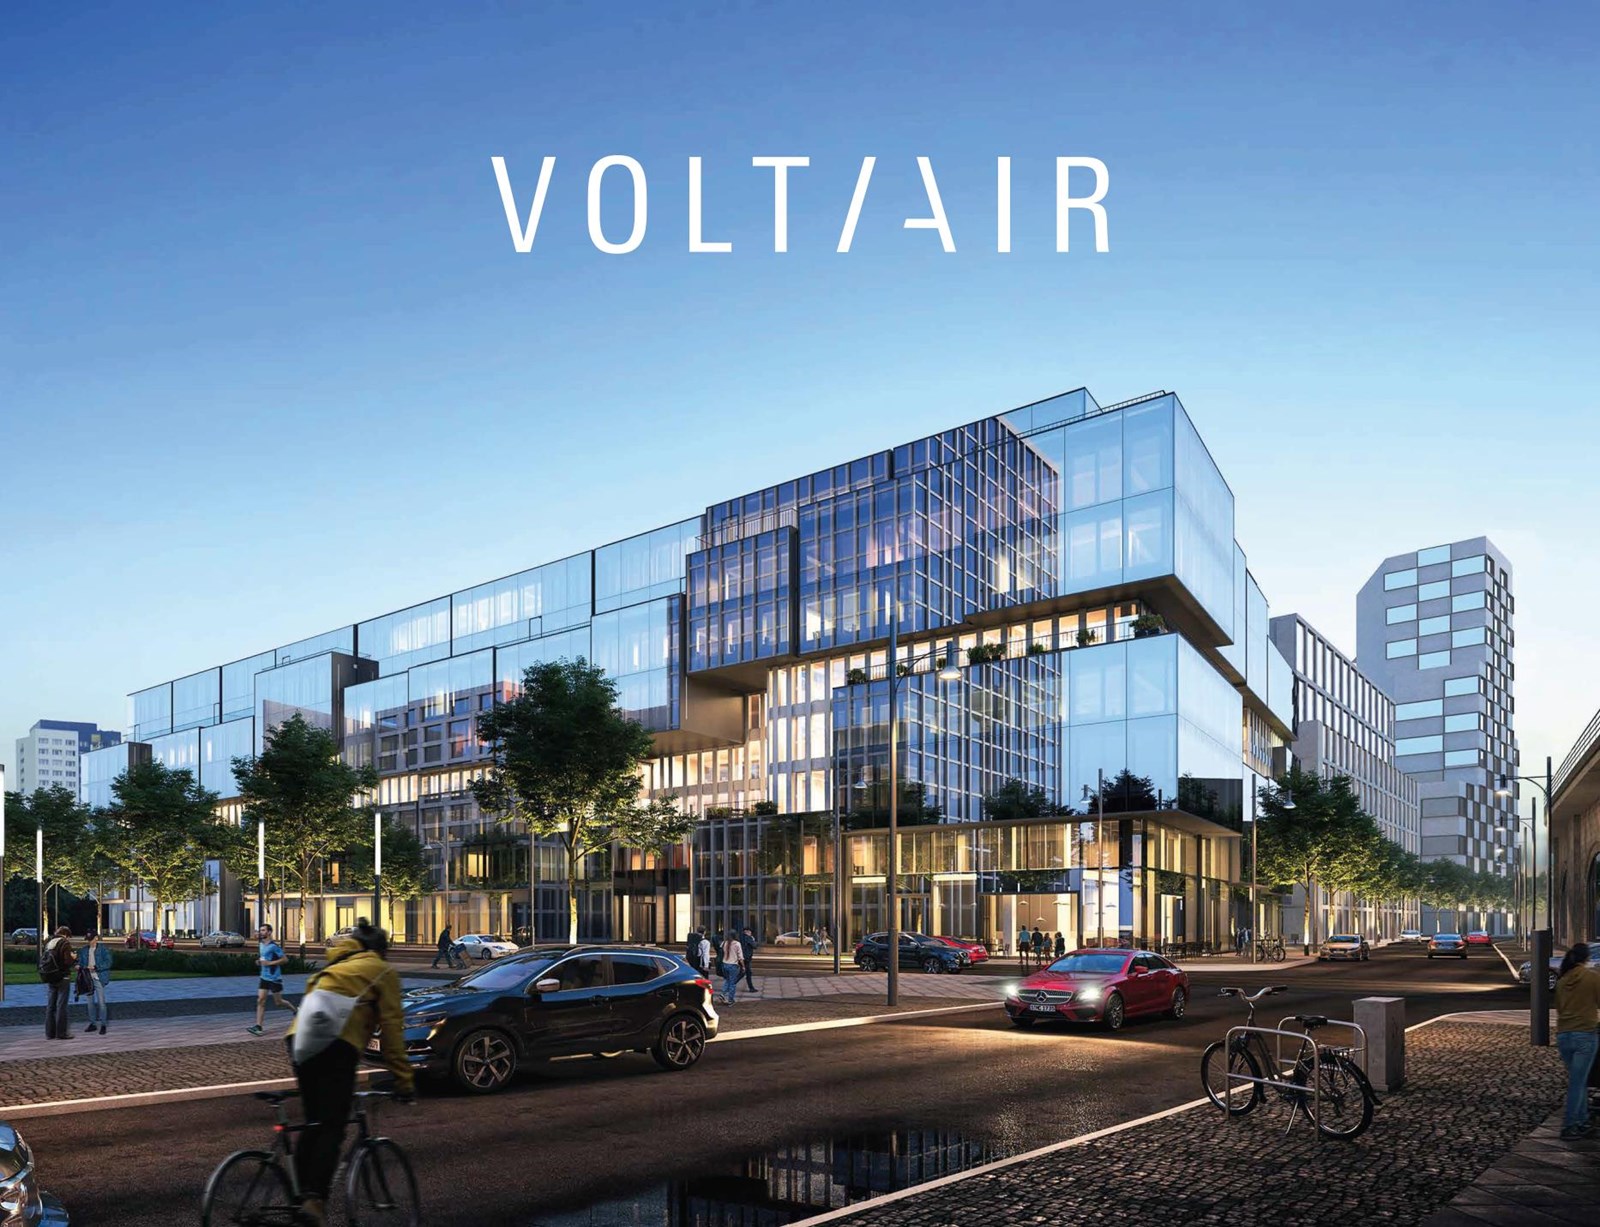 VolTair-Copyright ABG Real Estate Group.jpg